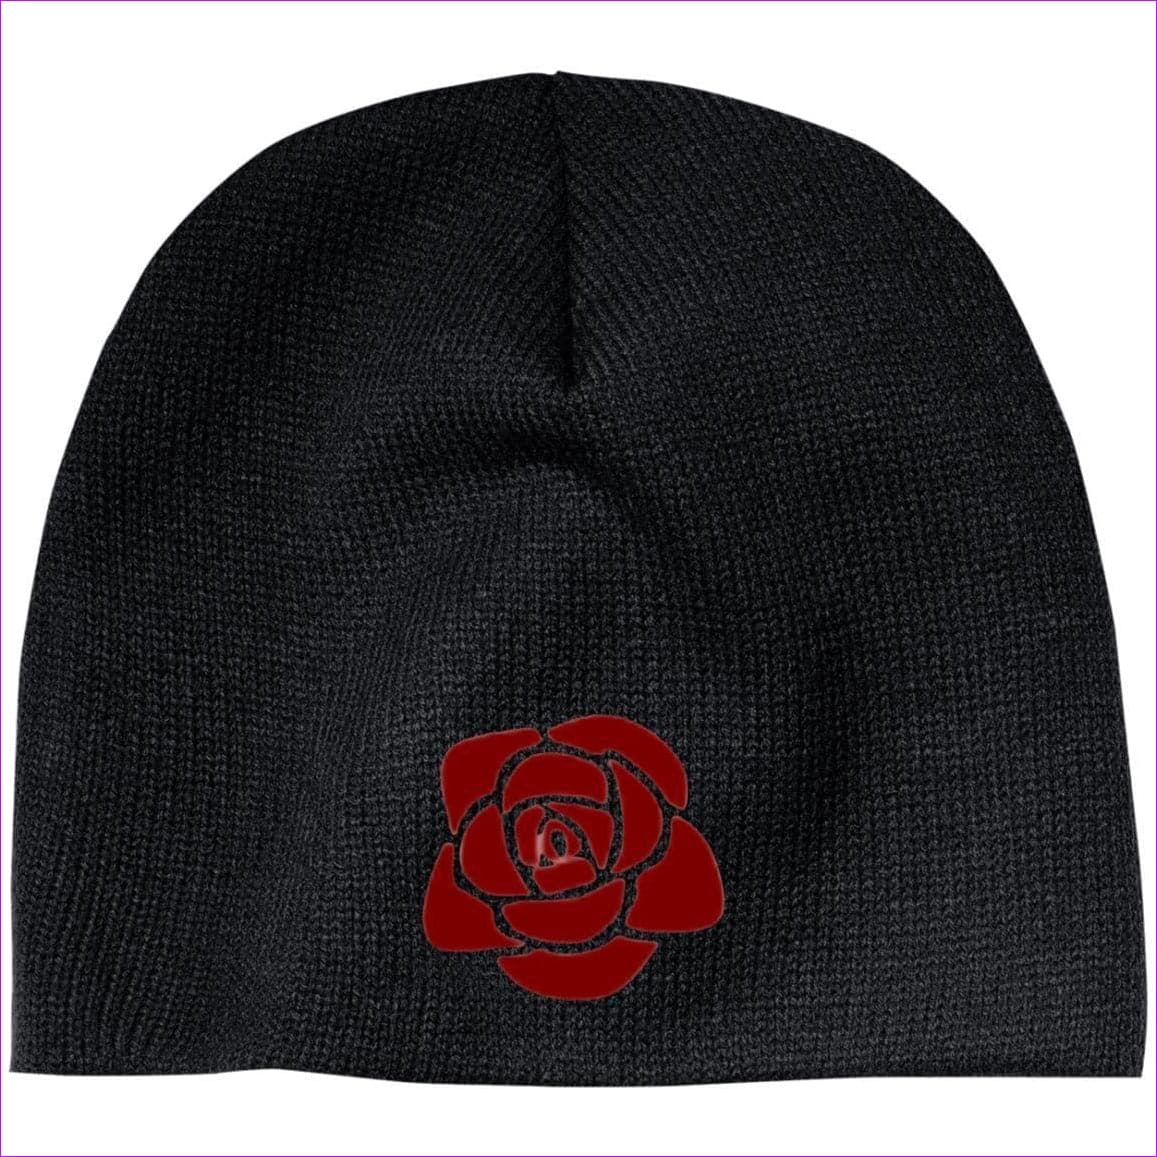 CP91 100% Acrylic Beanie Black One Size Rose Embroidered Knit Cap, Cap, Beanie - Beanie at TFC&H Co.